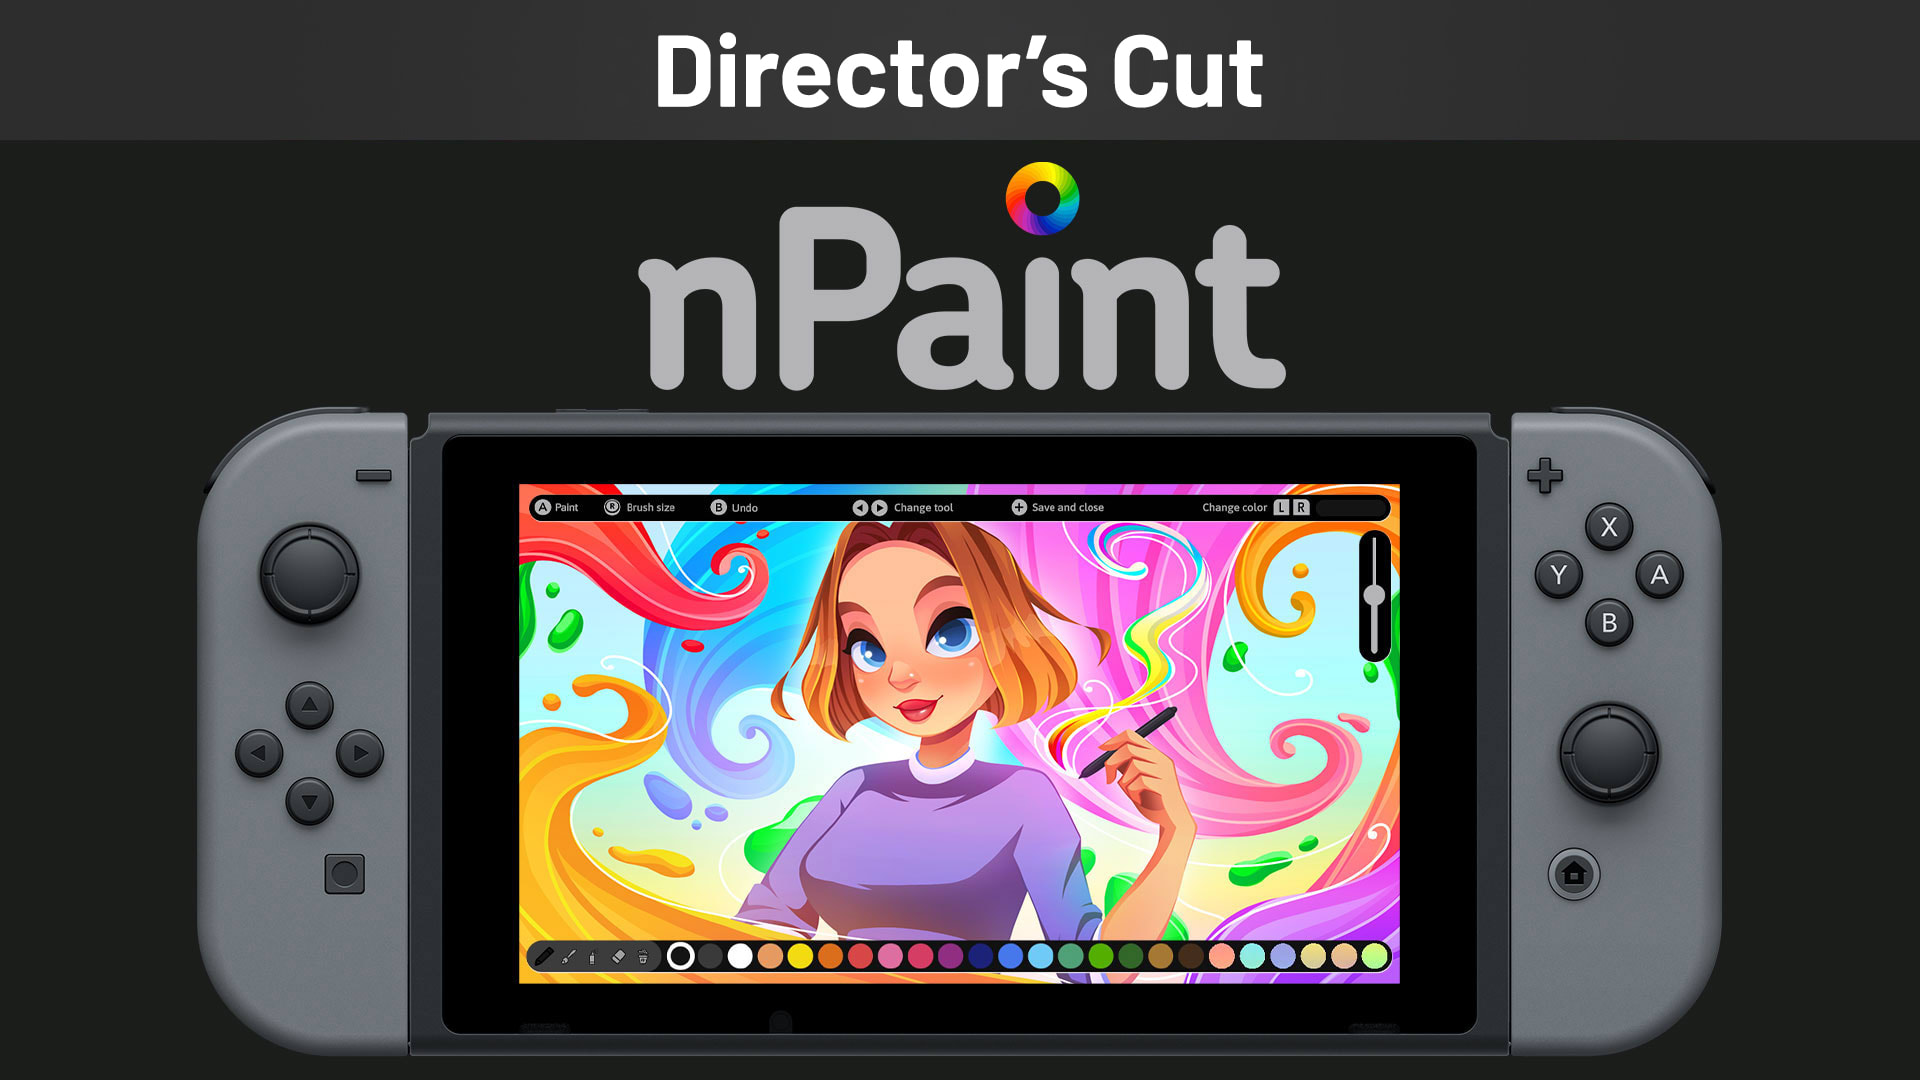 nPaint Director's Cut